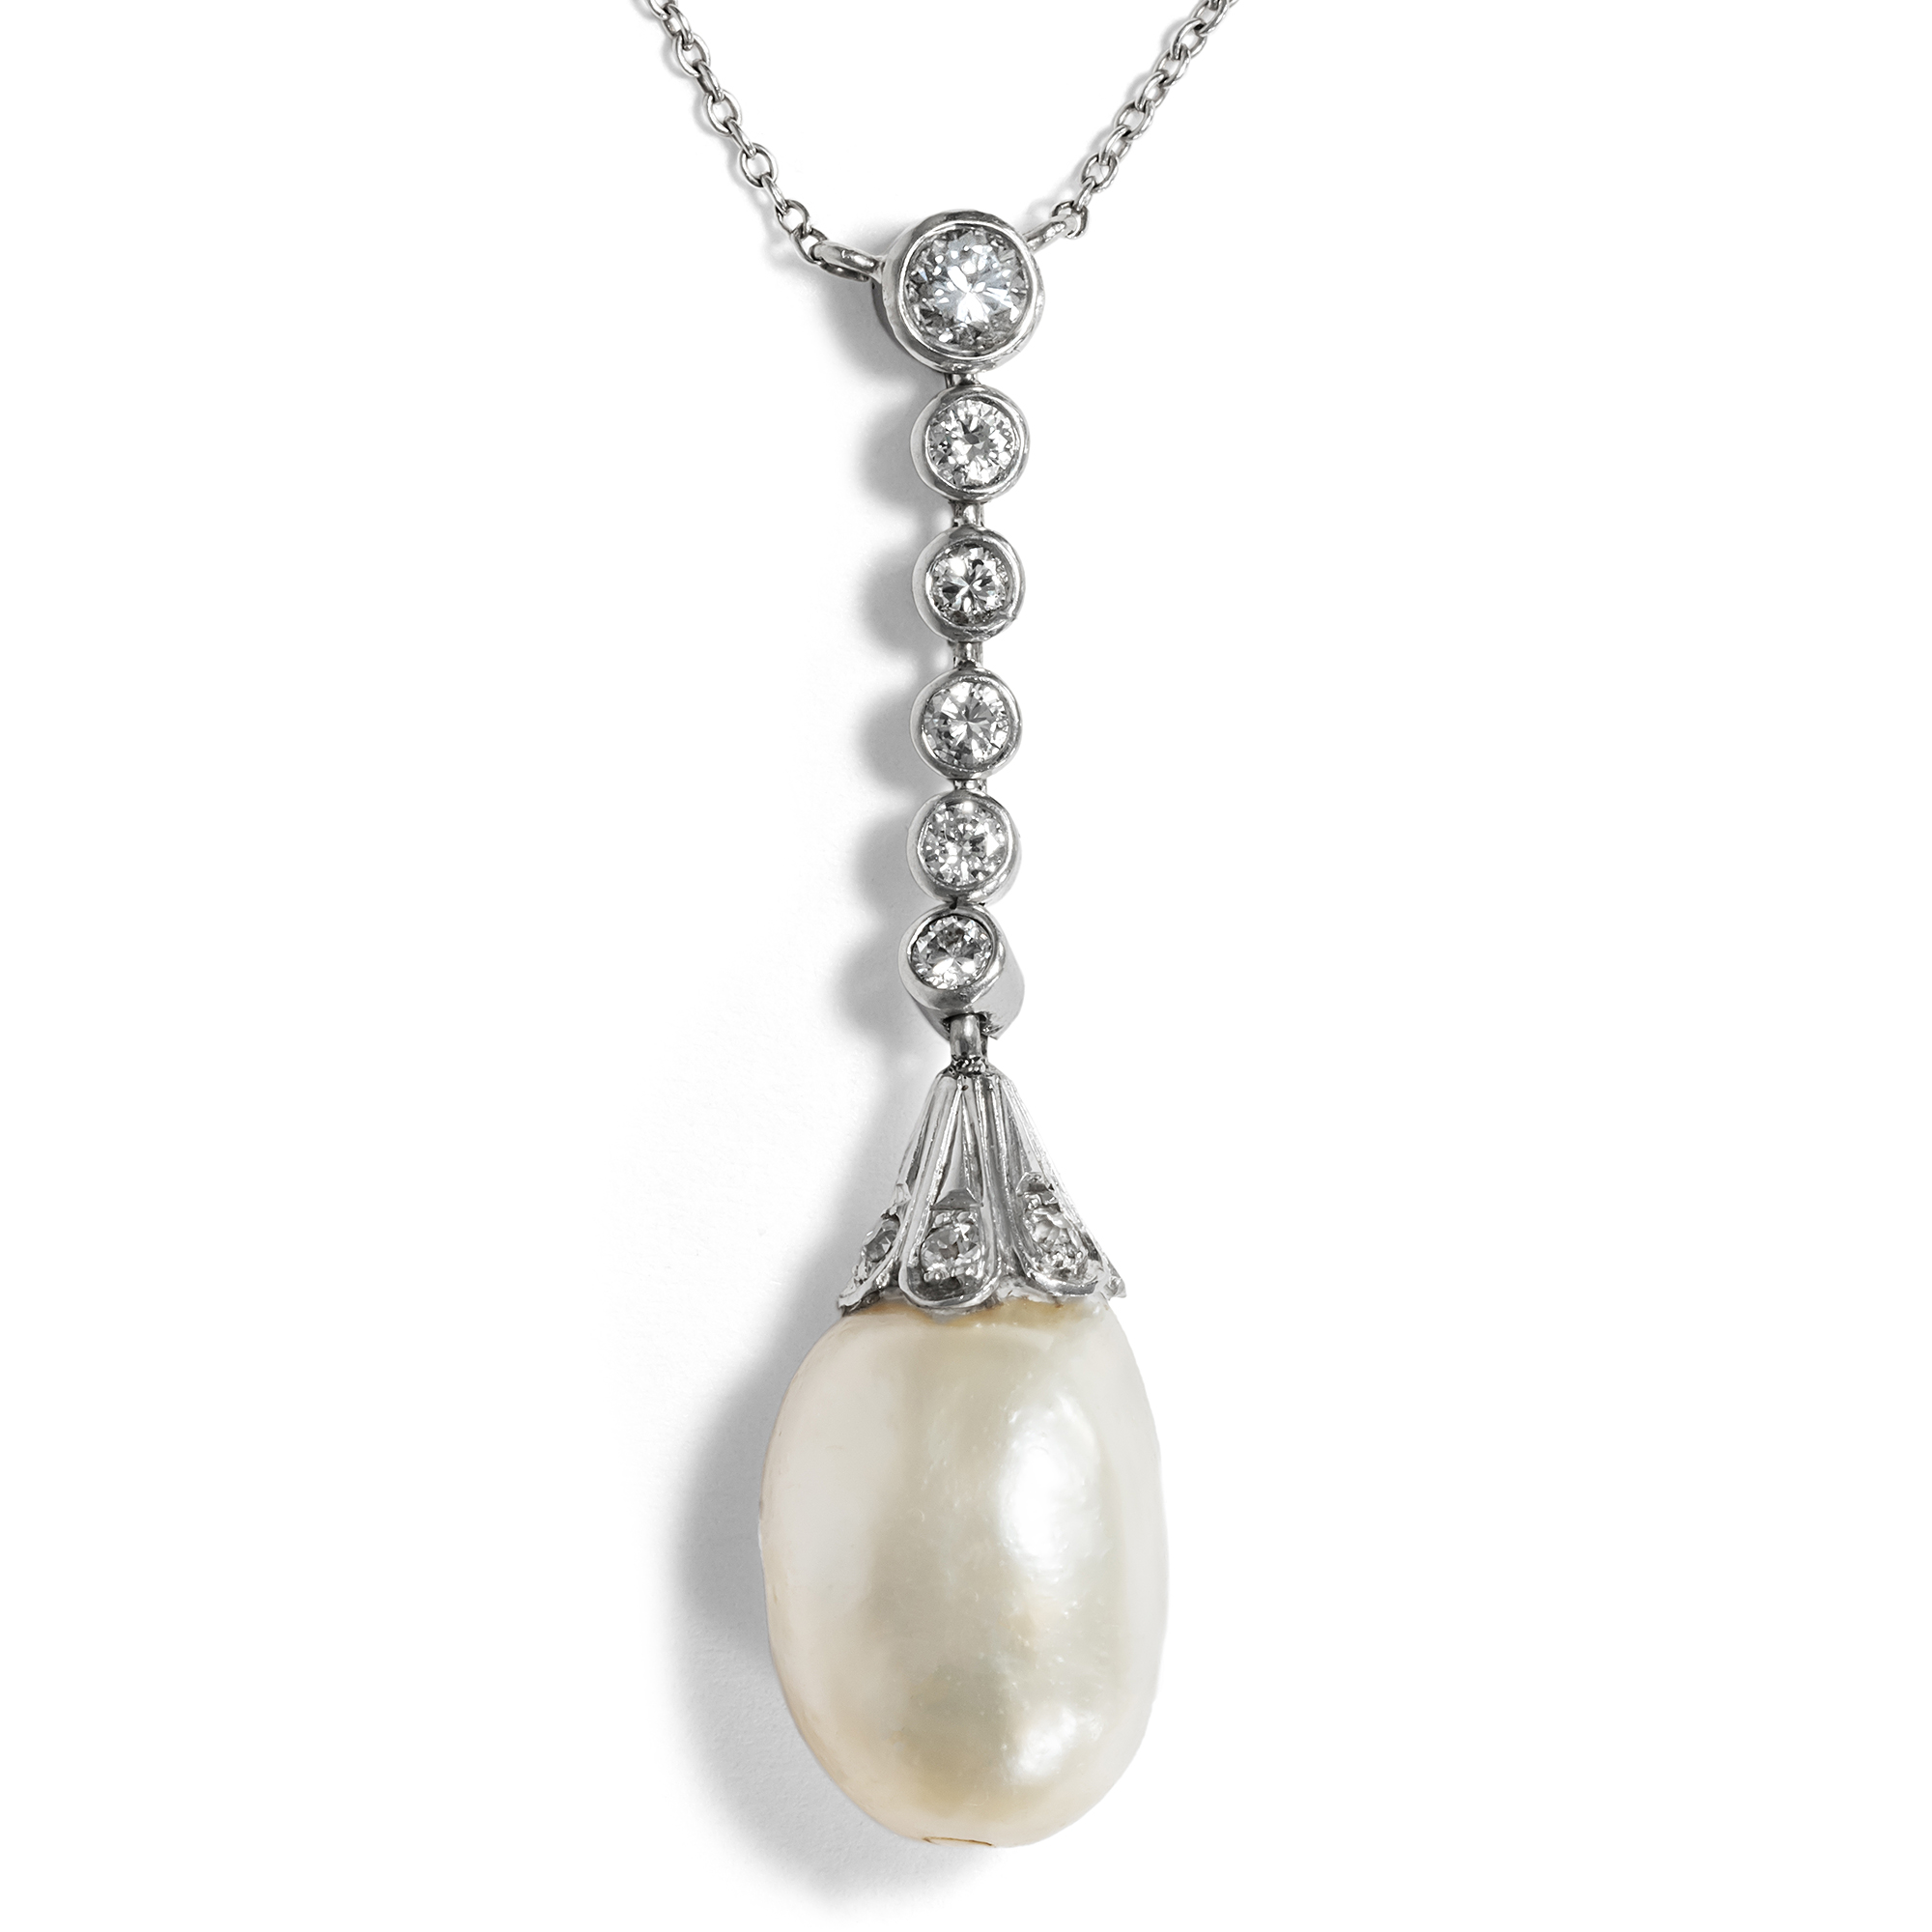 Precious Drop Necklace with Natural Pearl & Diamonds, circa 1920 & later